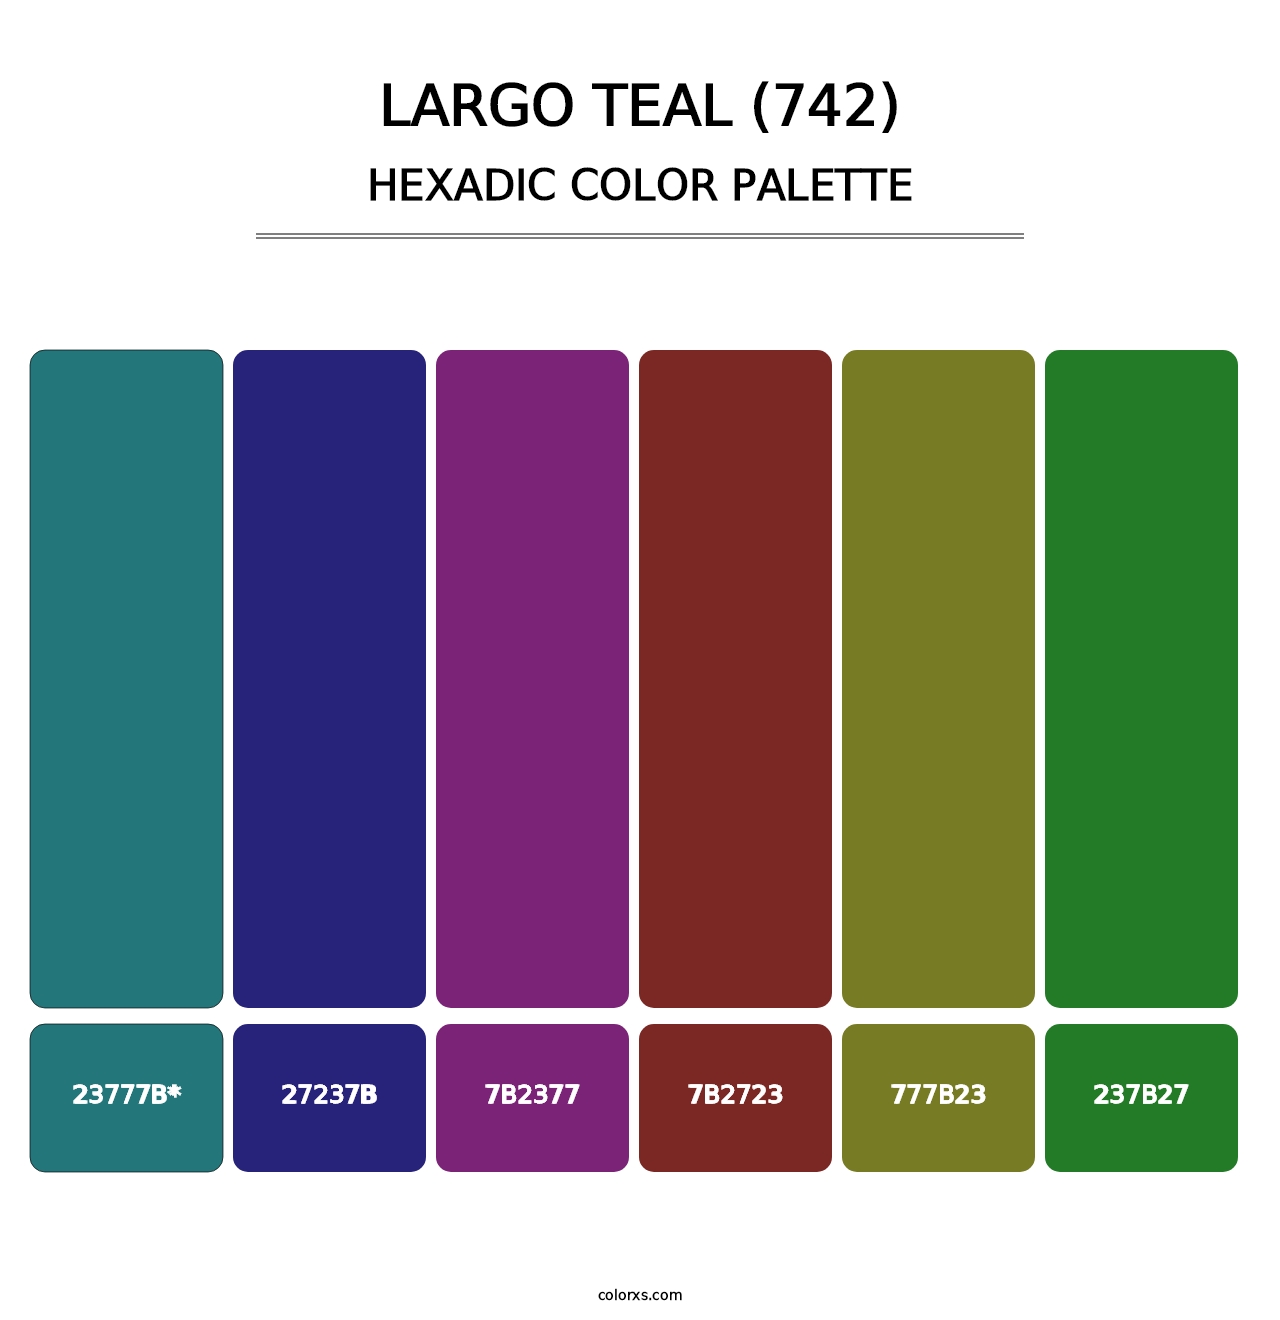 Largo Teal (742) - Hexadic Color Palette